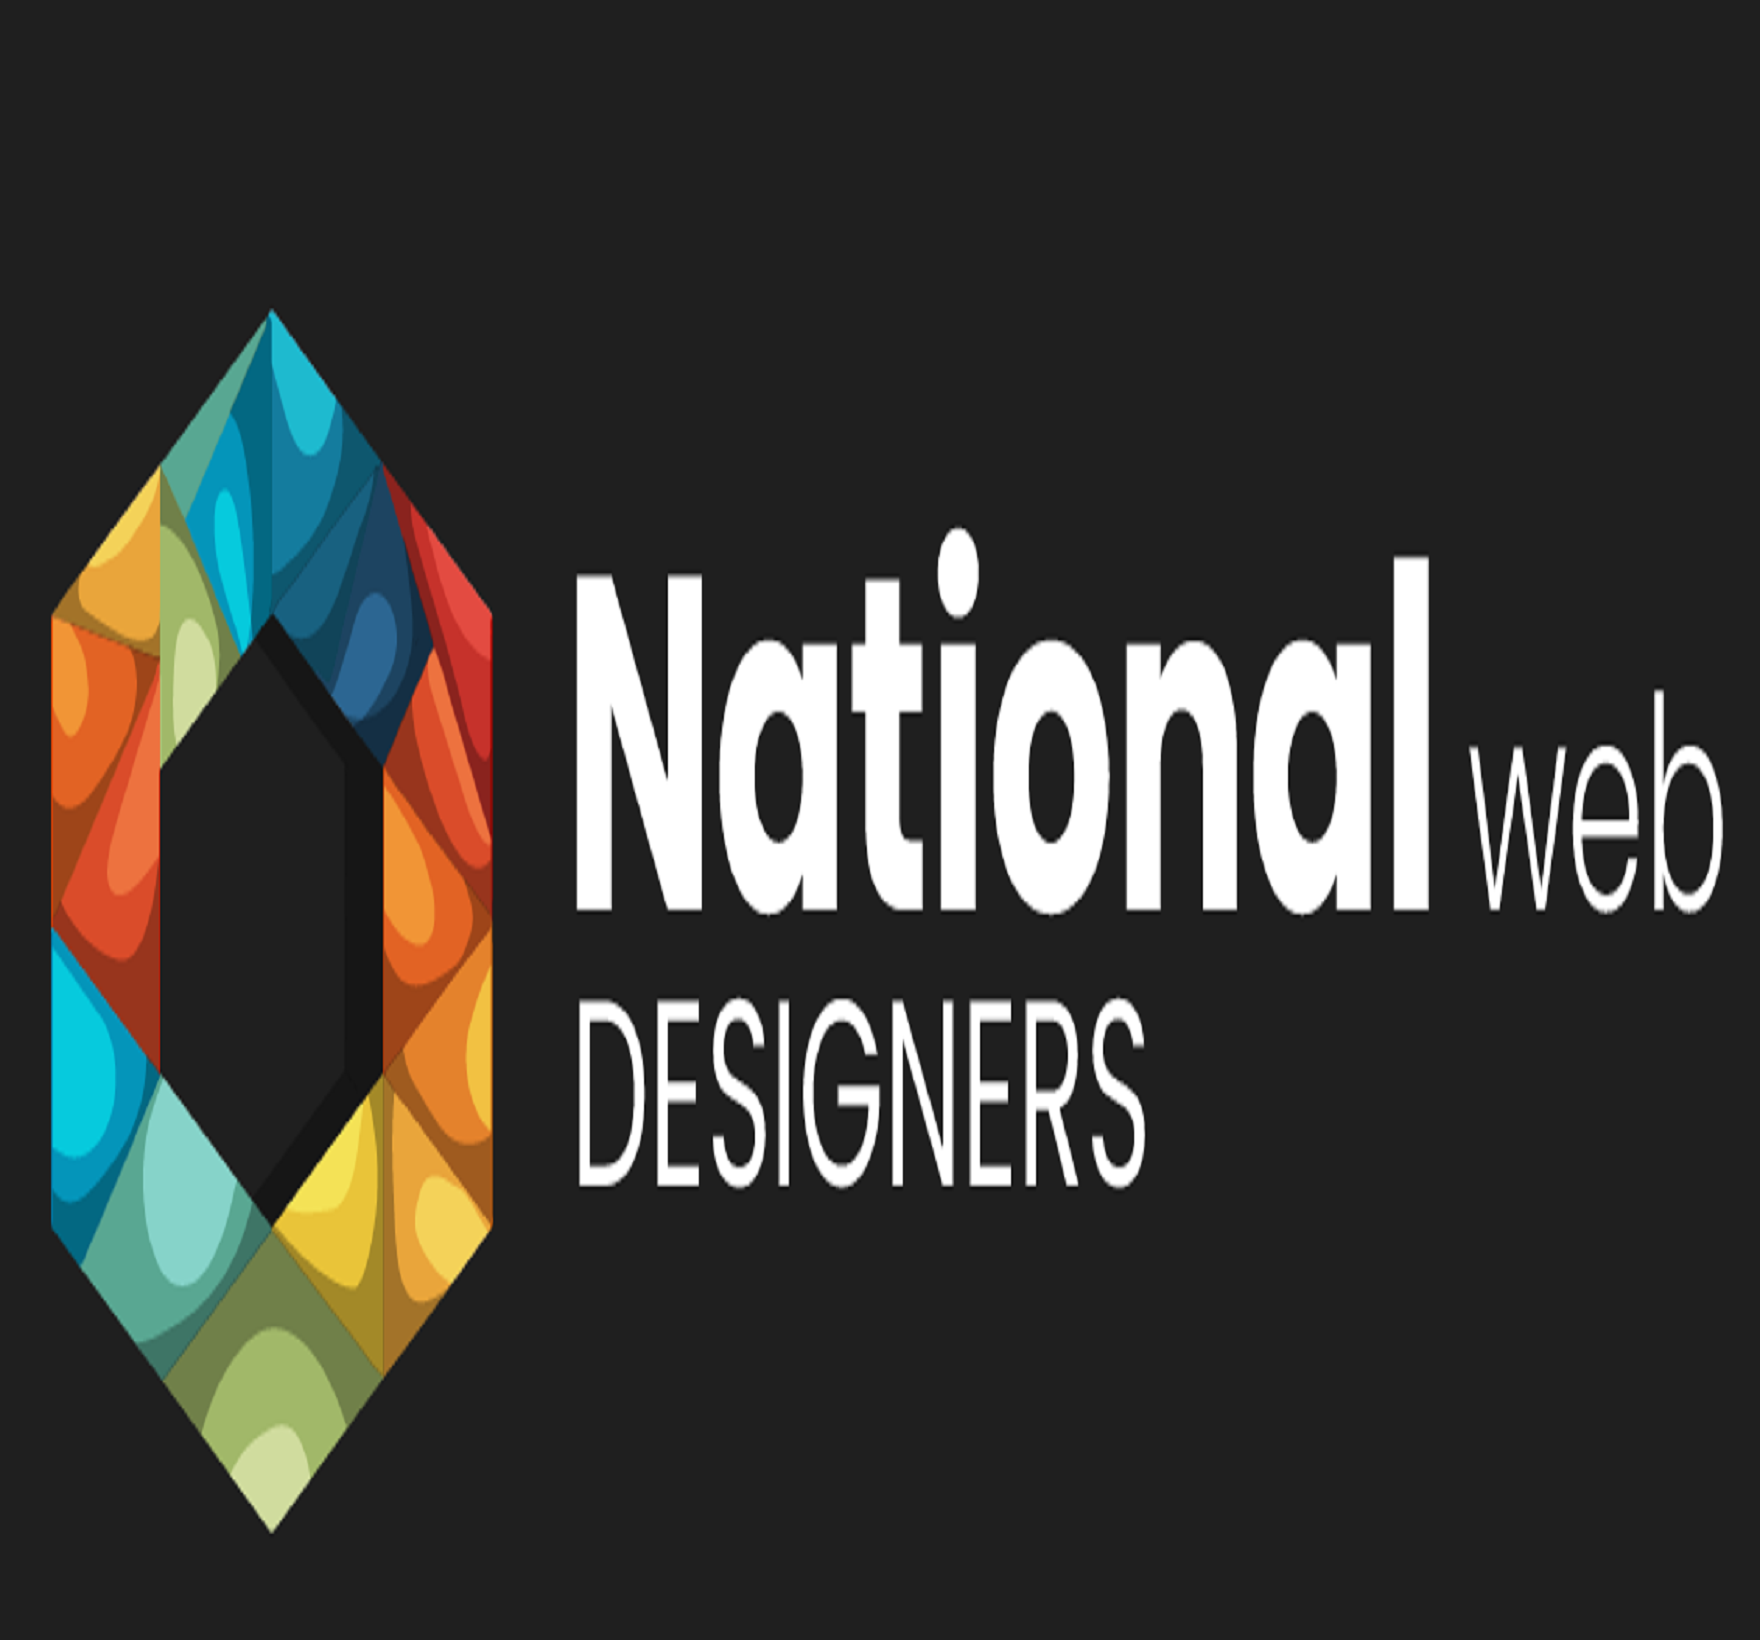 National web designers